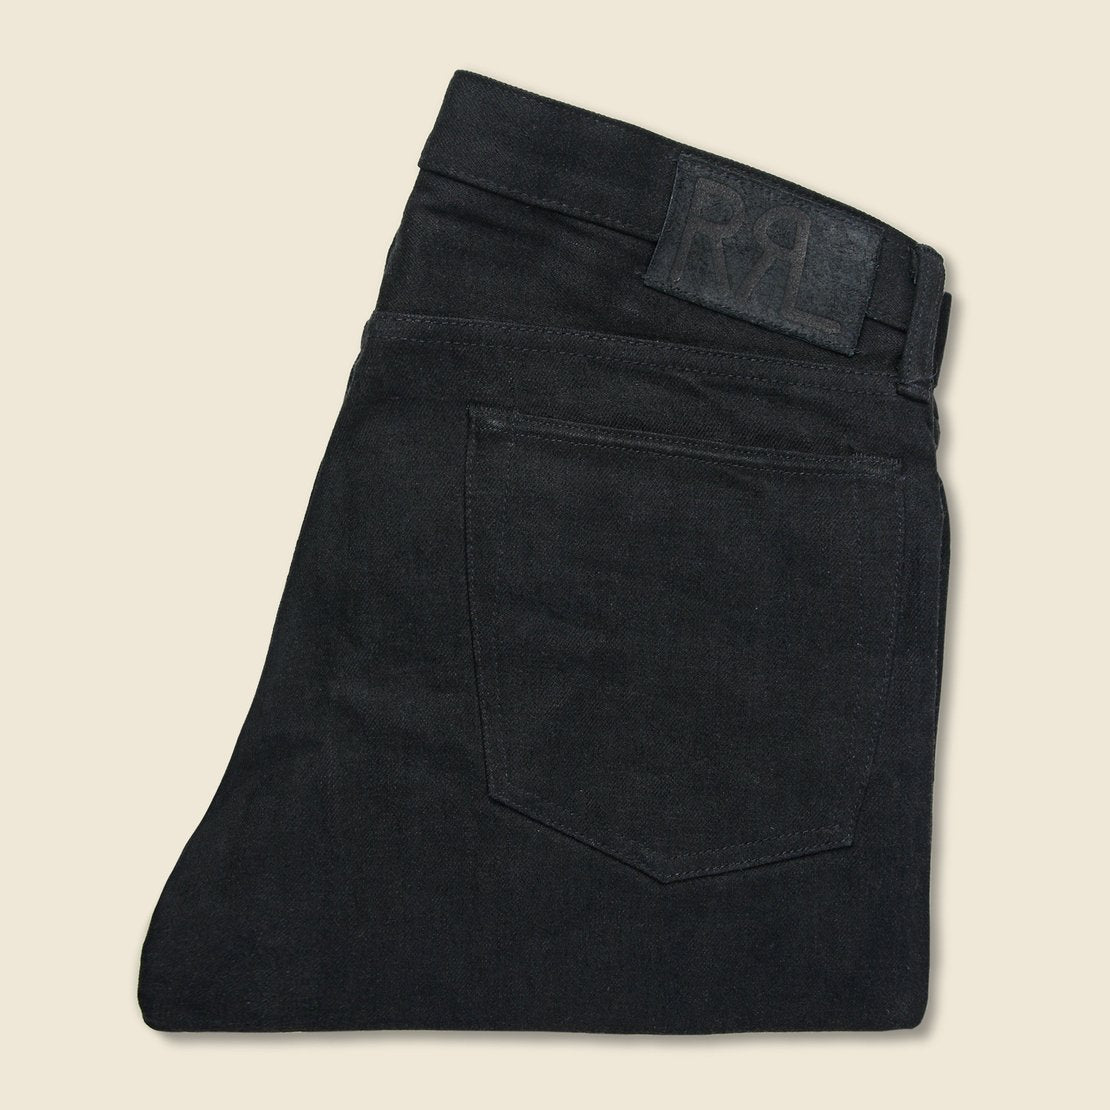 Slim Fit Jean - Black on Black - RRL - STAG Provisions - Pants - Denim